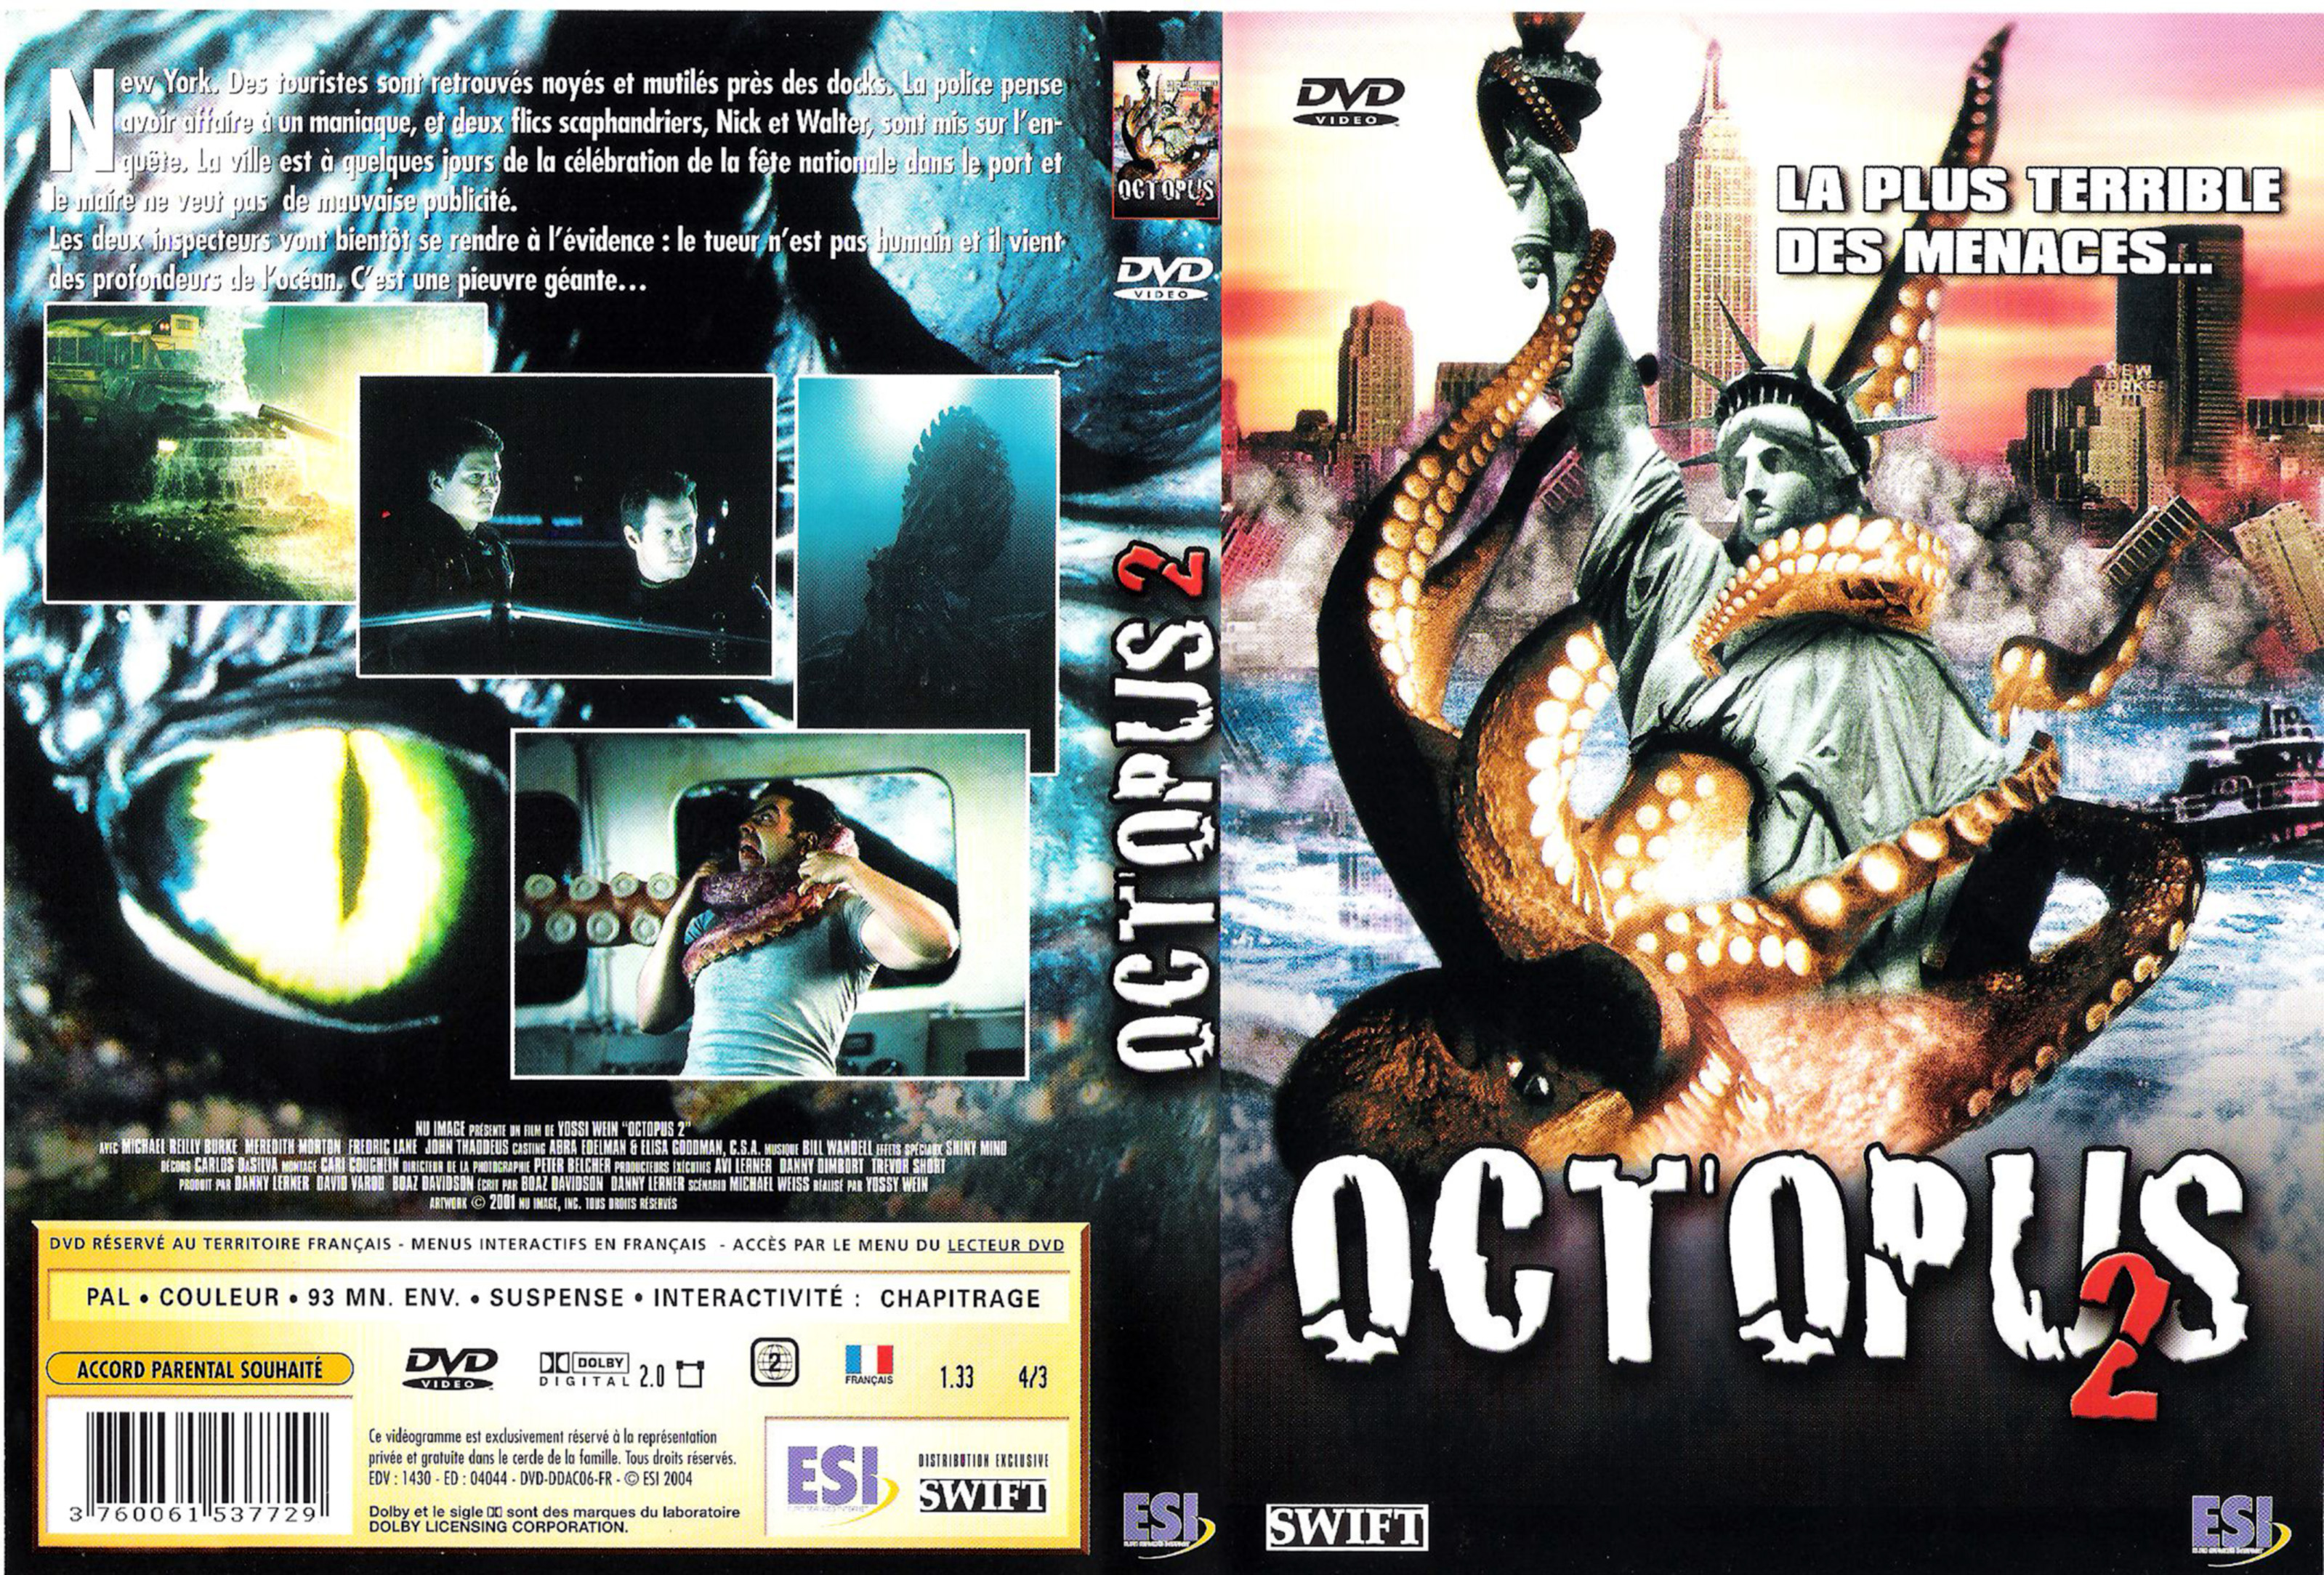 Jaquette DVD Octopus 2 v2